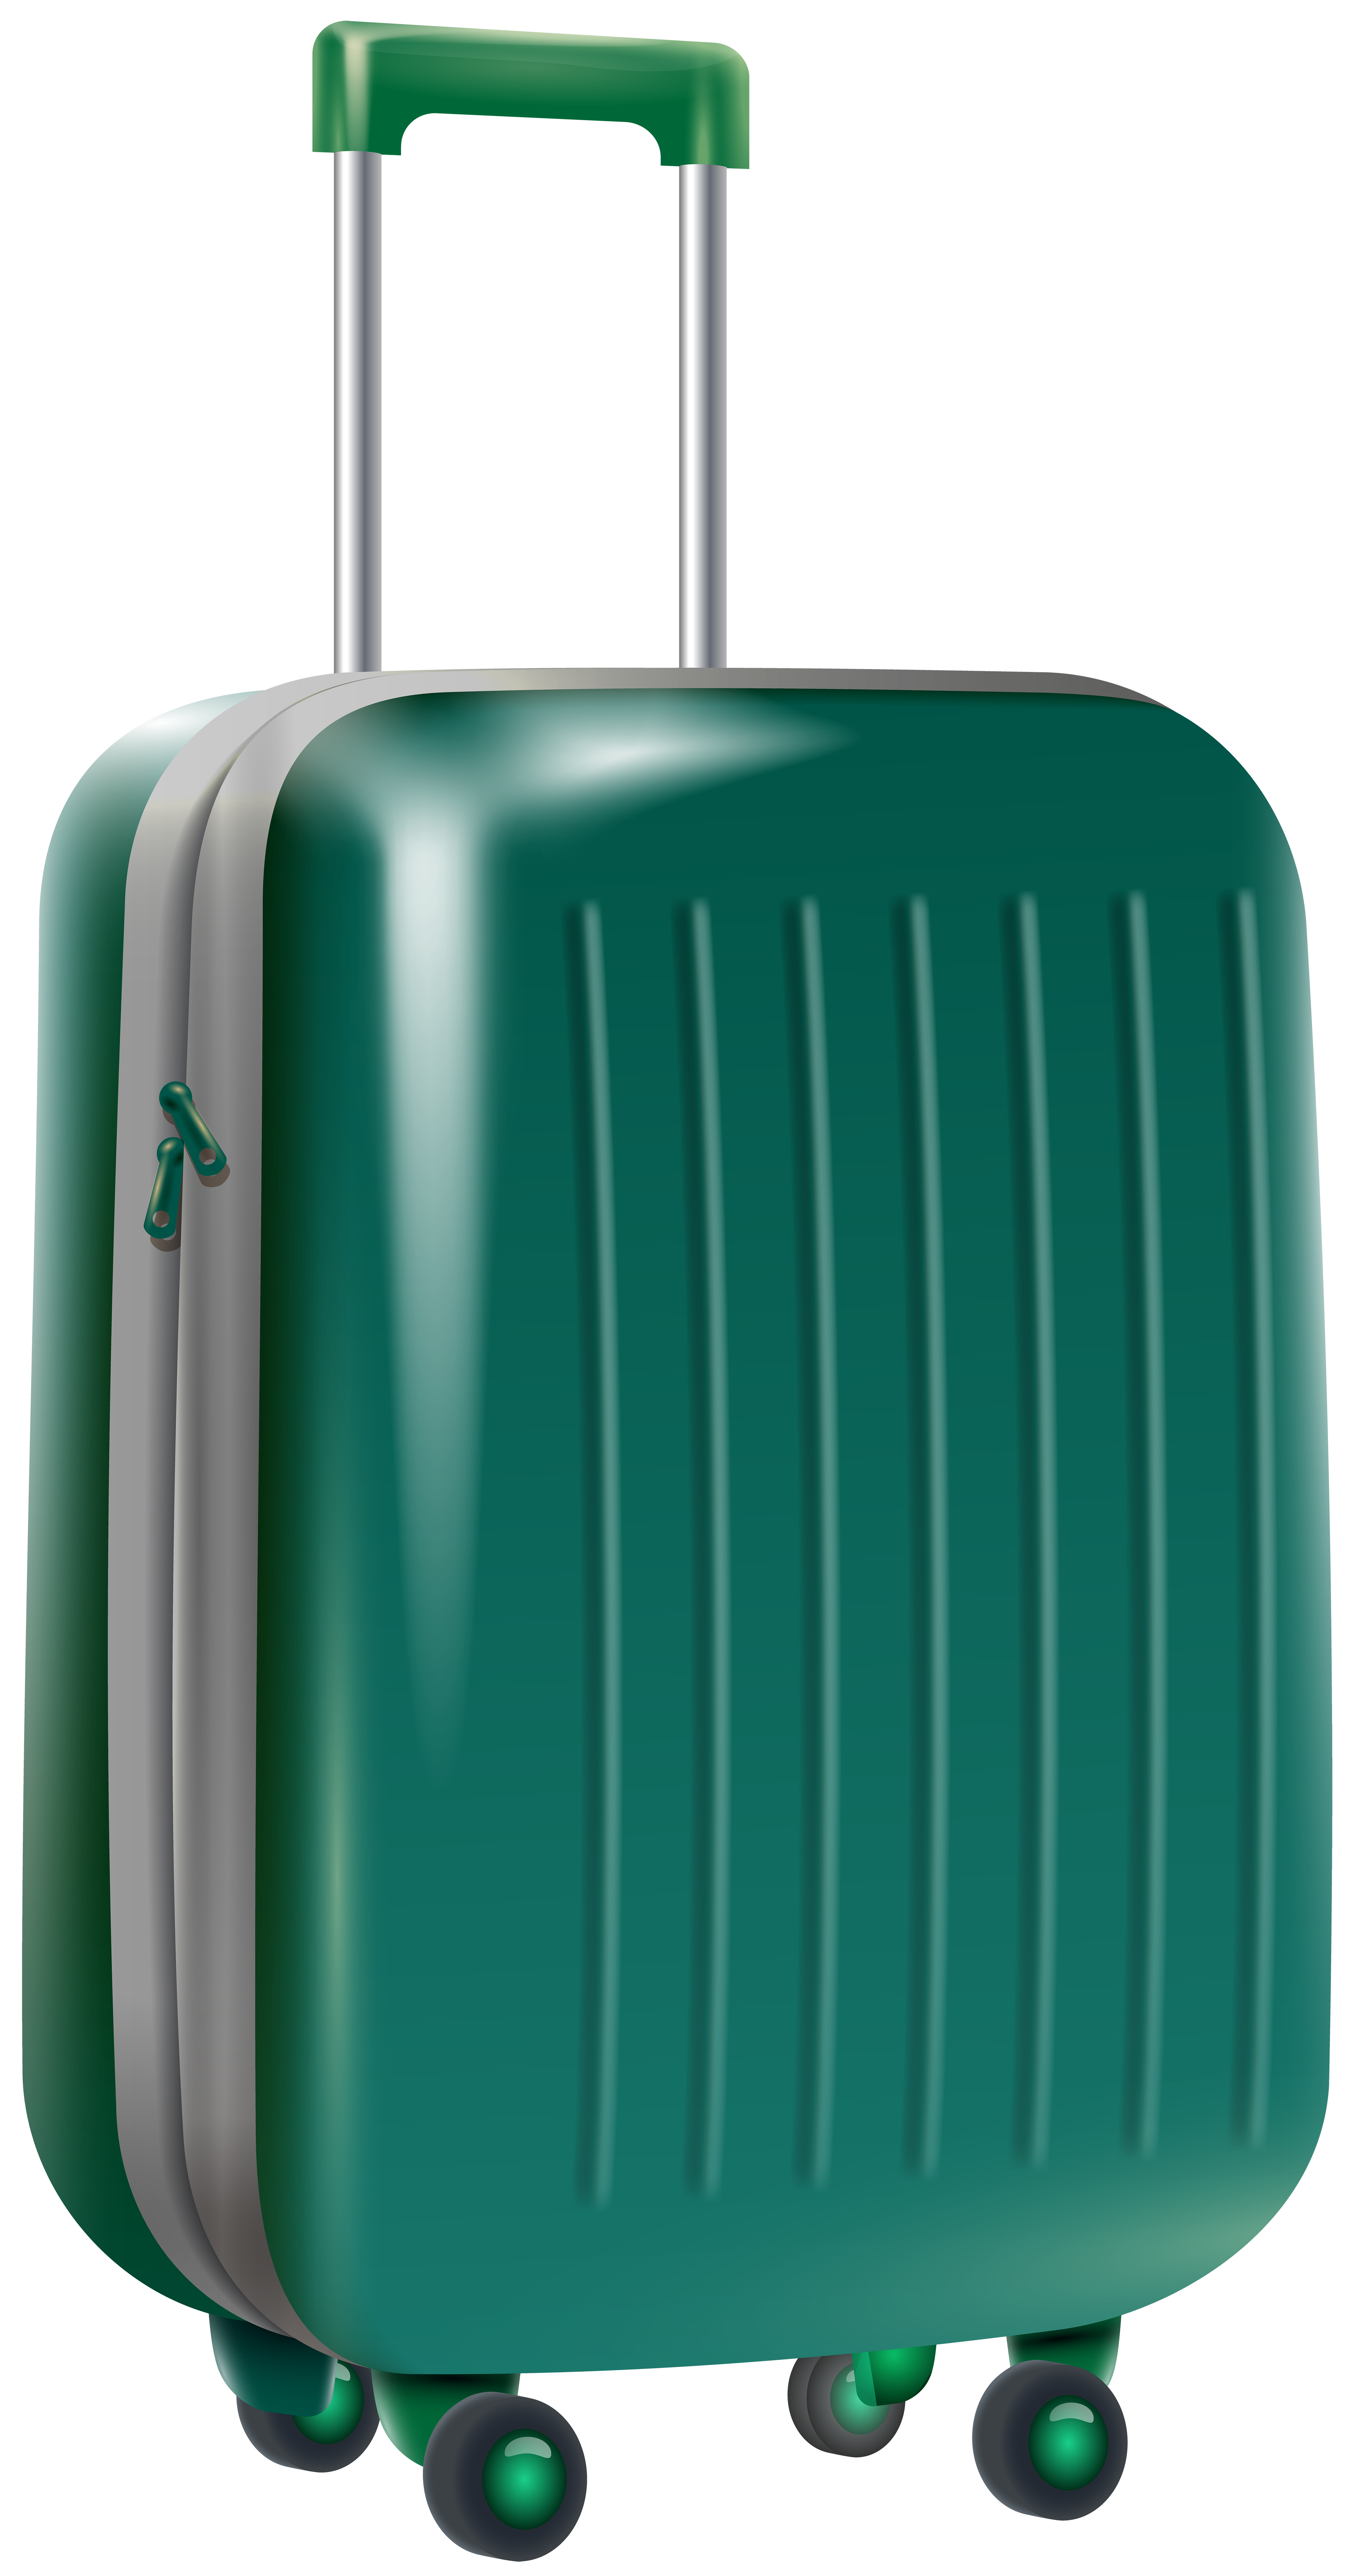 Suitcase Baggage Travel - Trolley Travel Bag PNG Transparent Clip Art ...